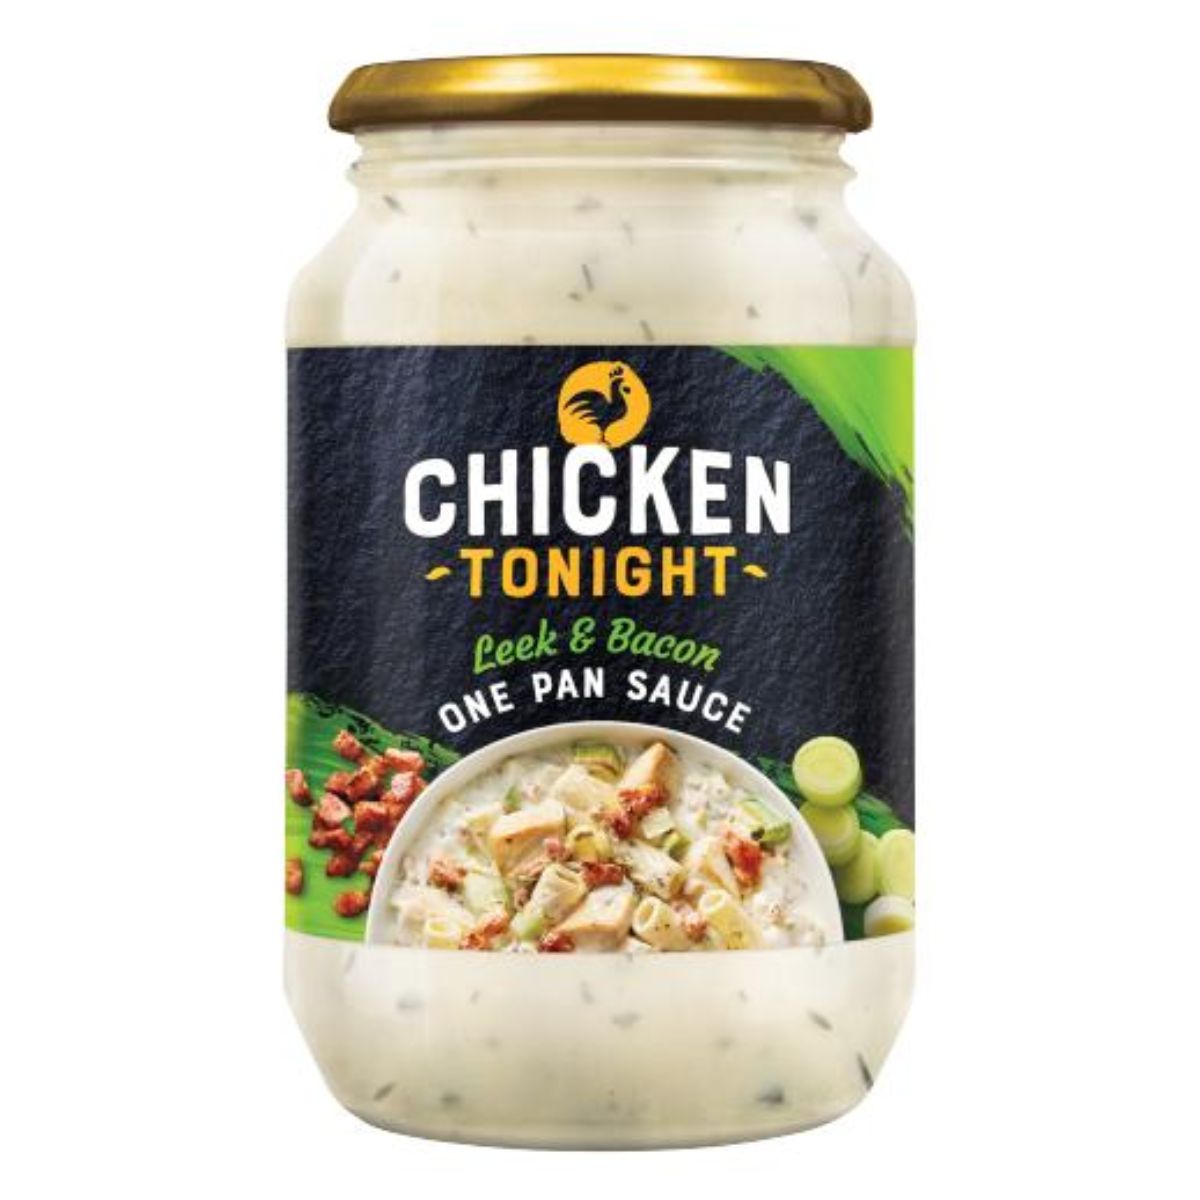 A jar of Chicken Tonight - Leek & Bacon One Pan Sauce - 500g.